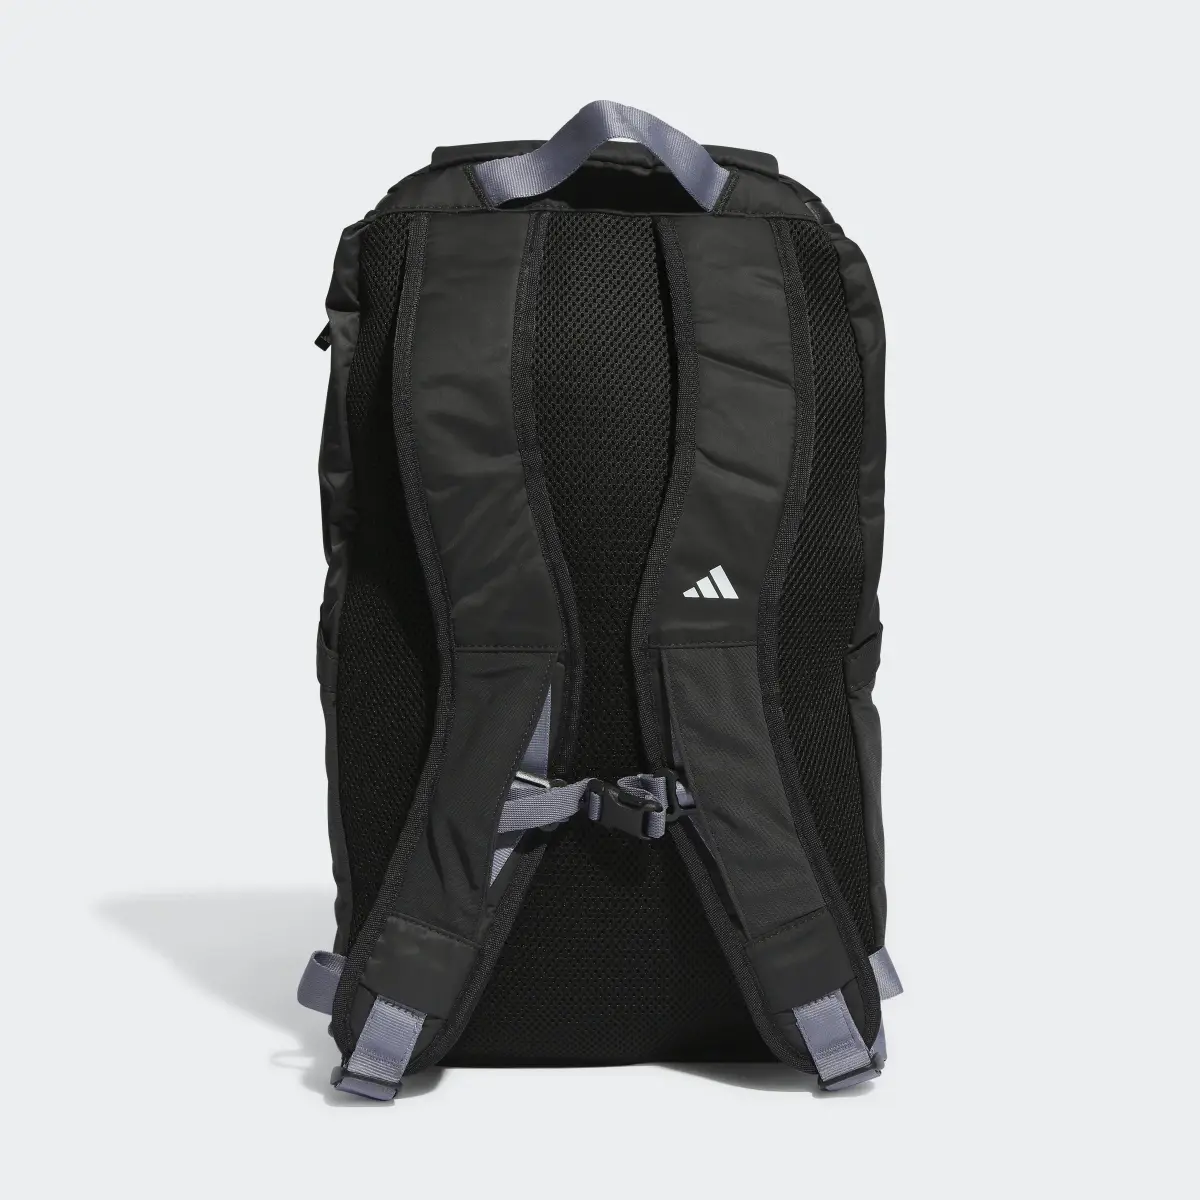 Adidas Designed for Training Gym Backpack. 3